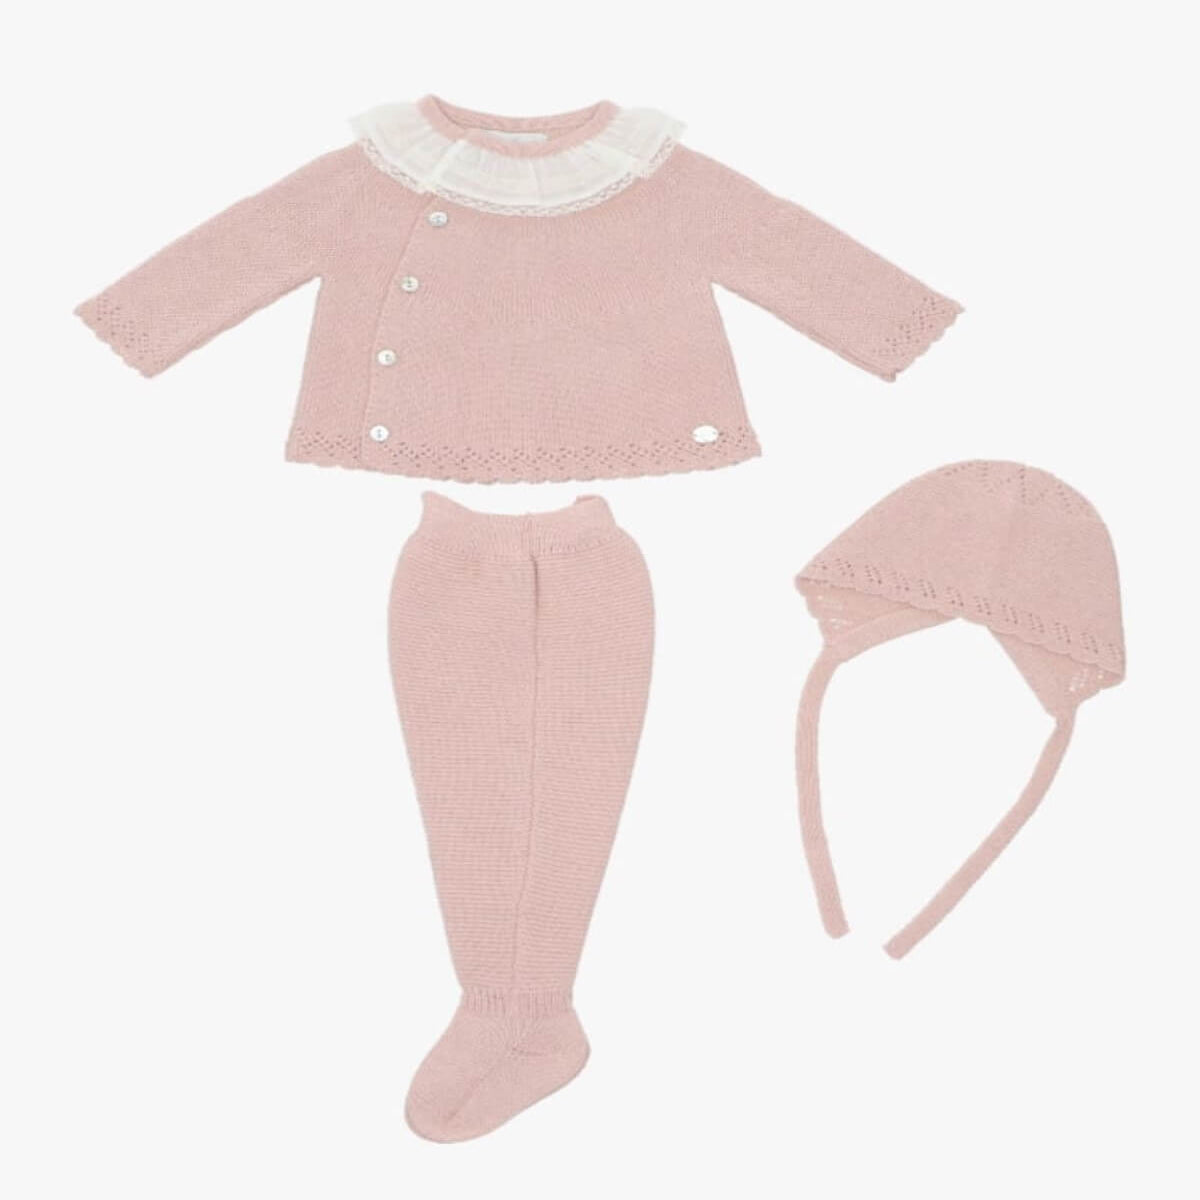 martin aranda "Camilla" Ash Rose Knitted Pram Set from tors childrens wear